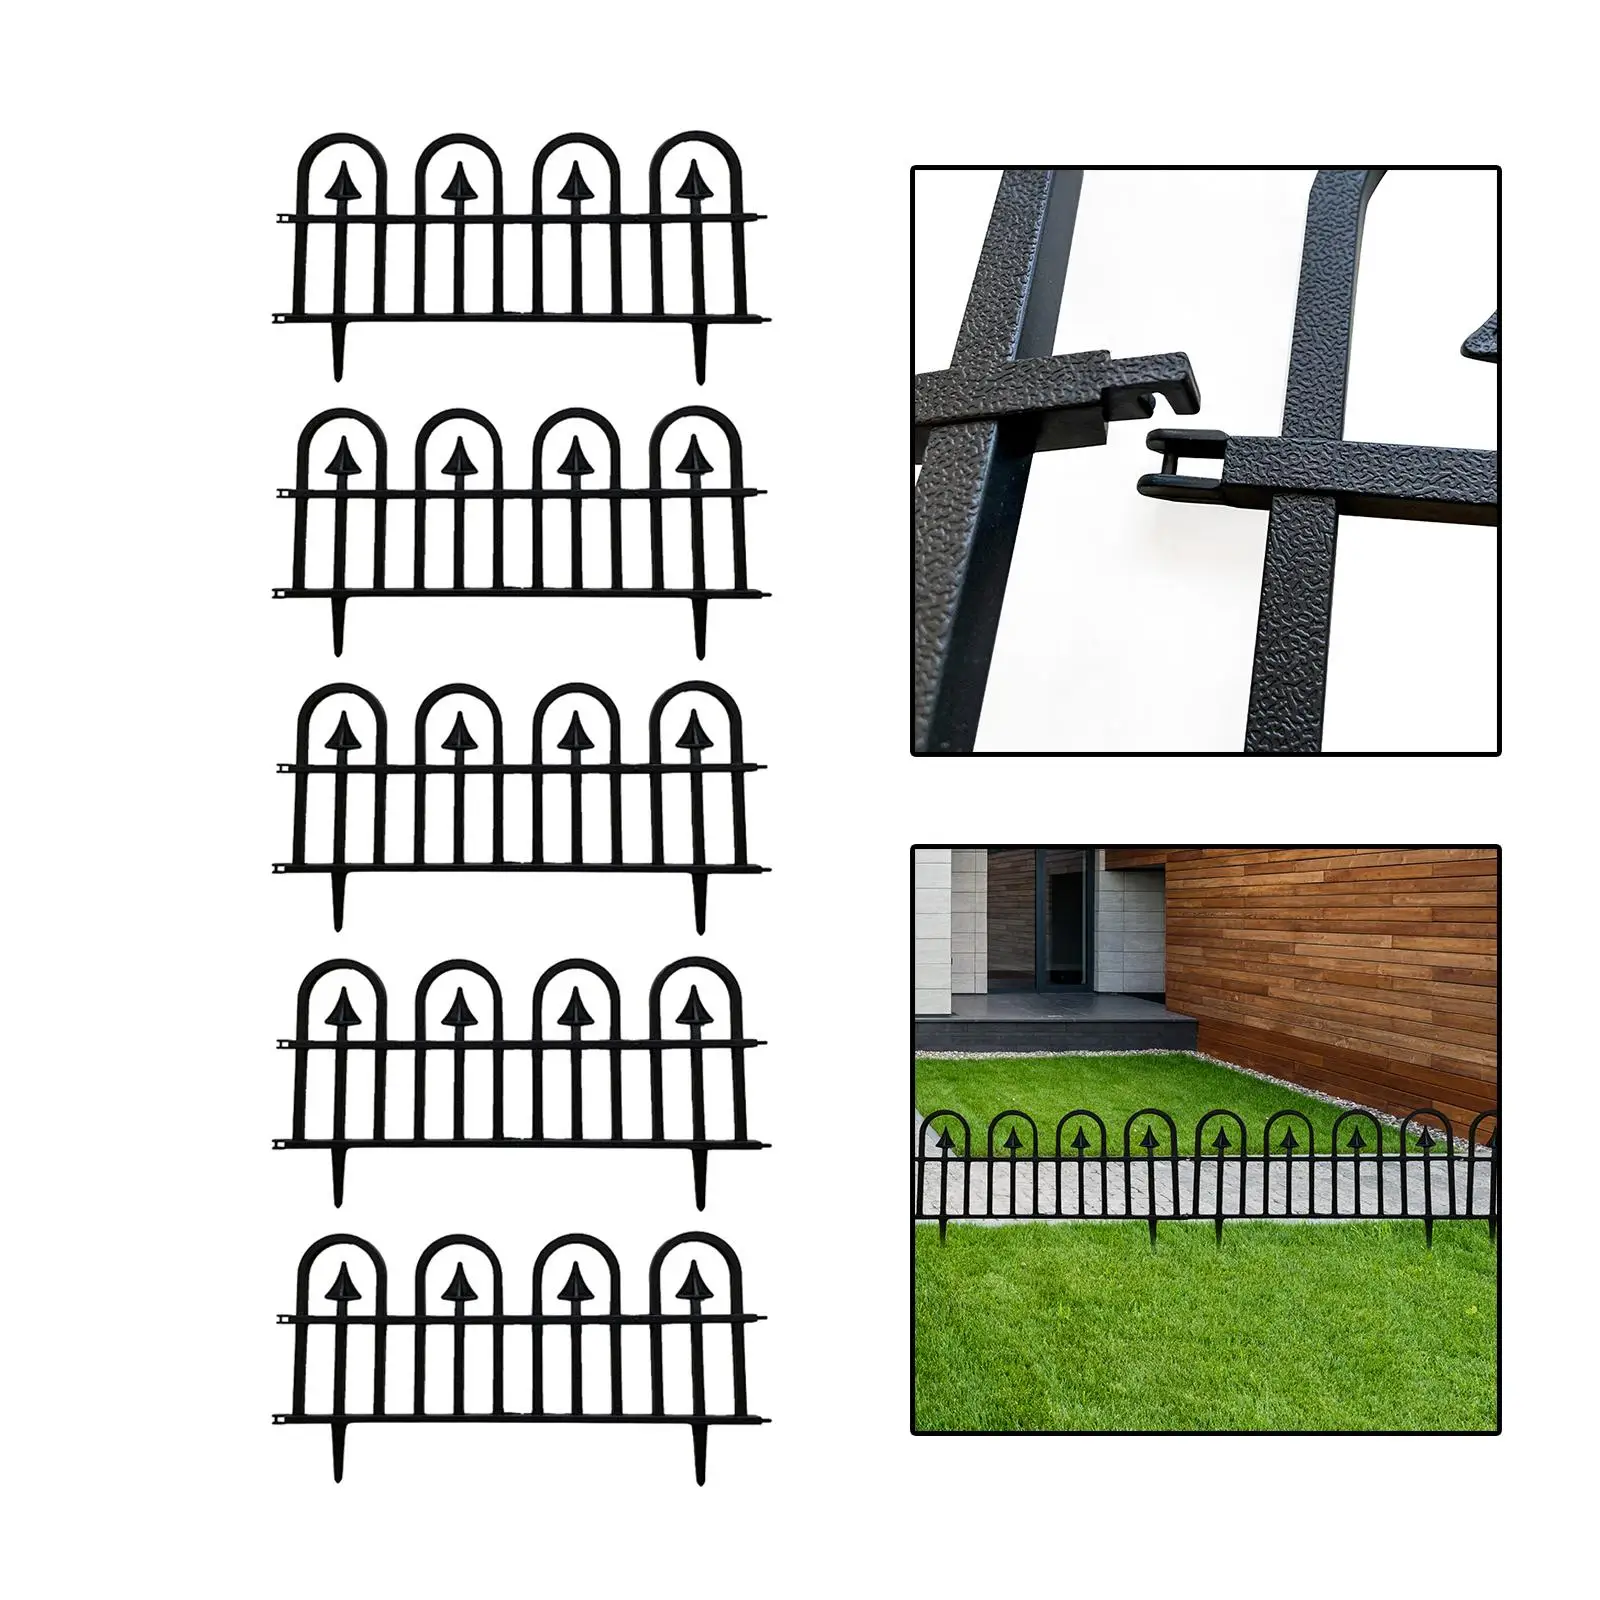 5 Pieces Garden Edging Border Fence Border Garden Fencing Fence Liner for Flower Lawn Edge